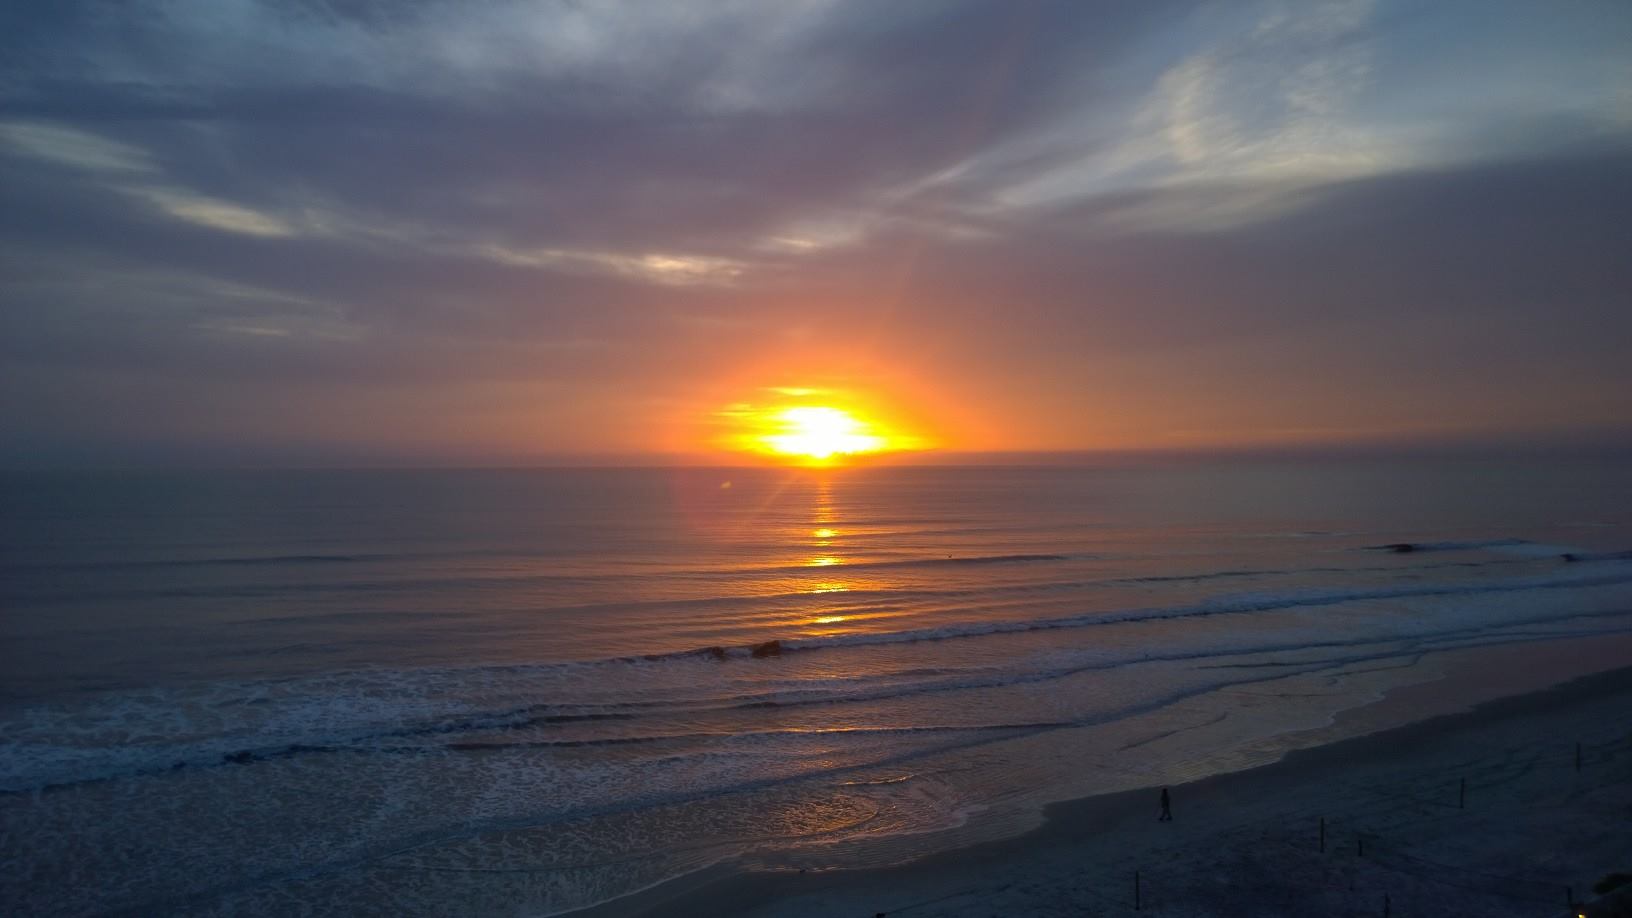 Daytona Beach sunrise